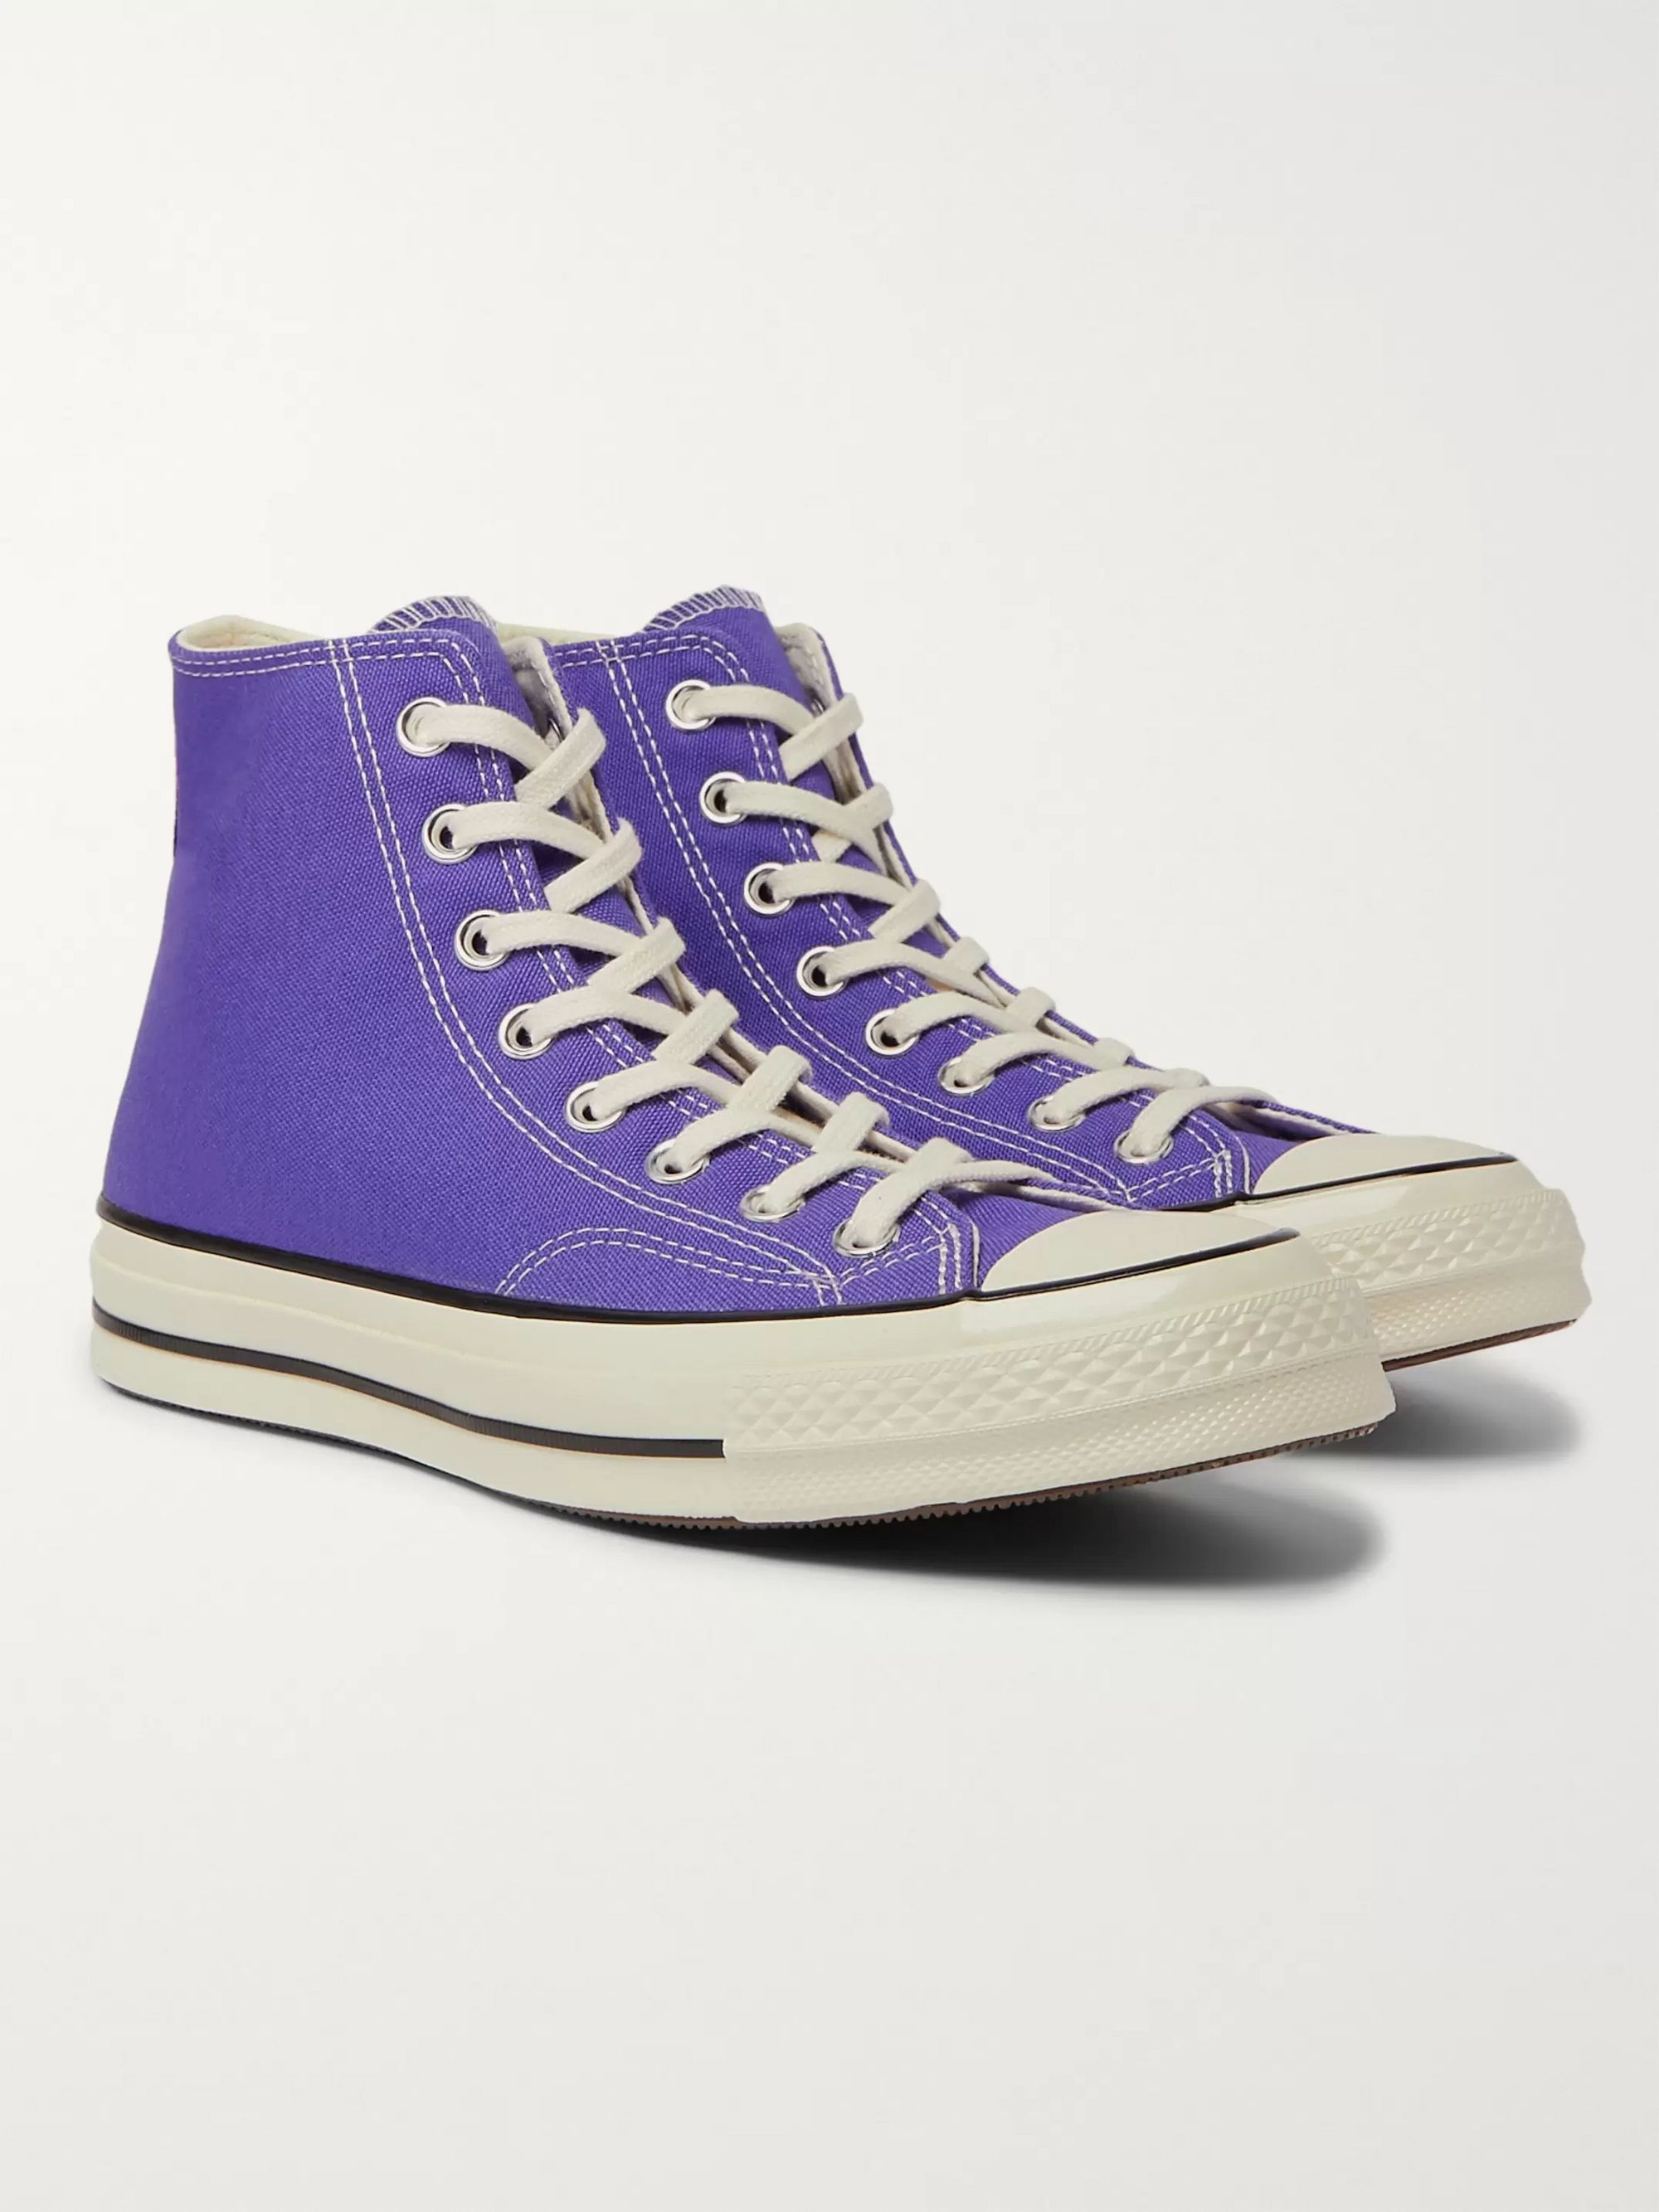 purple converse high tops